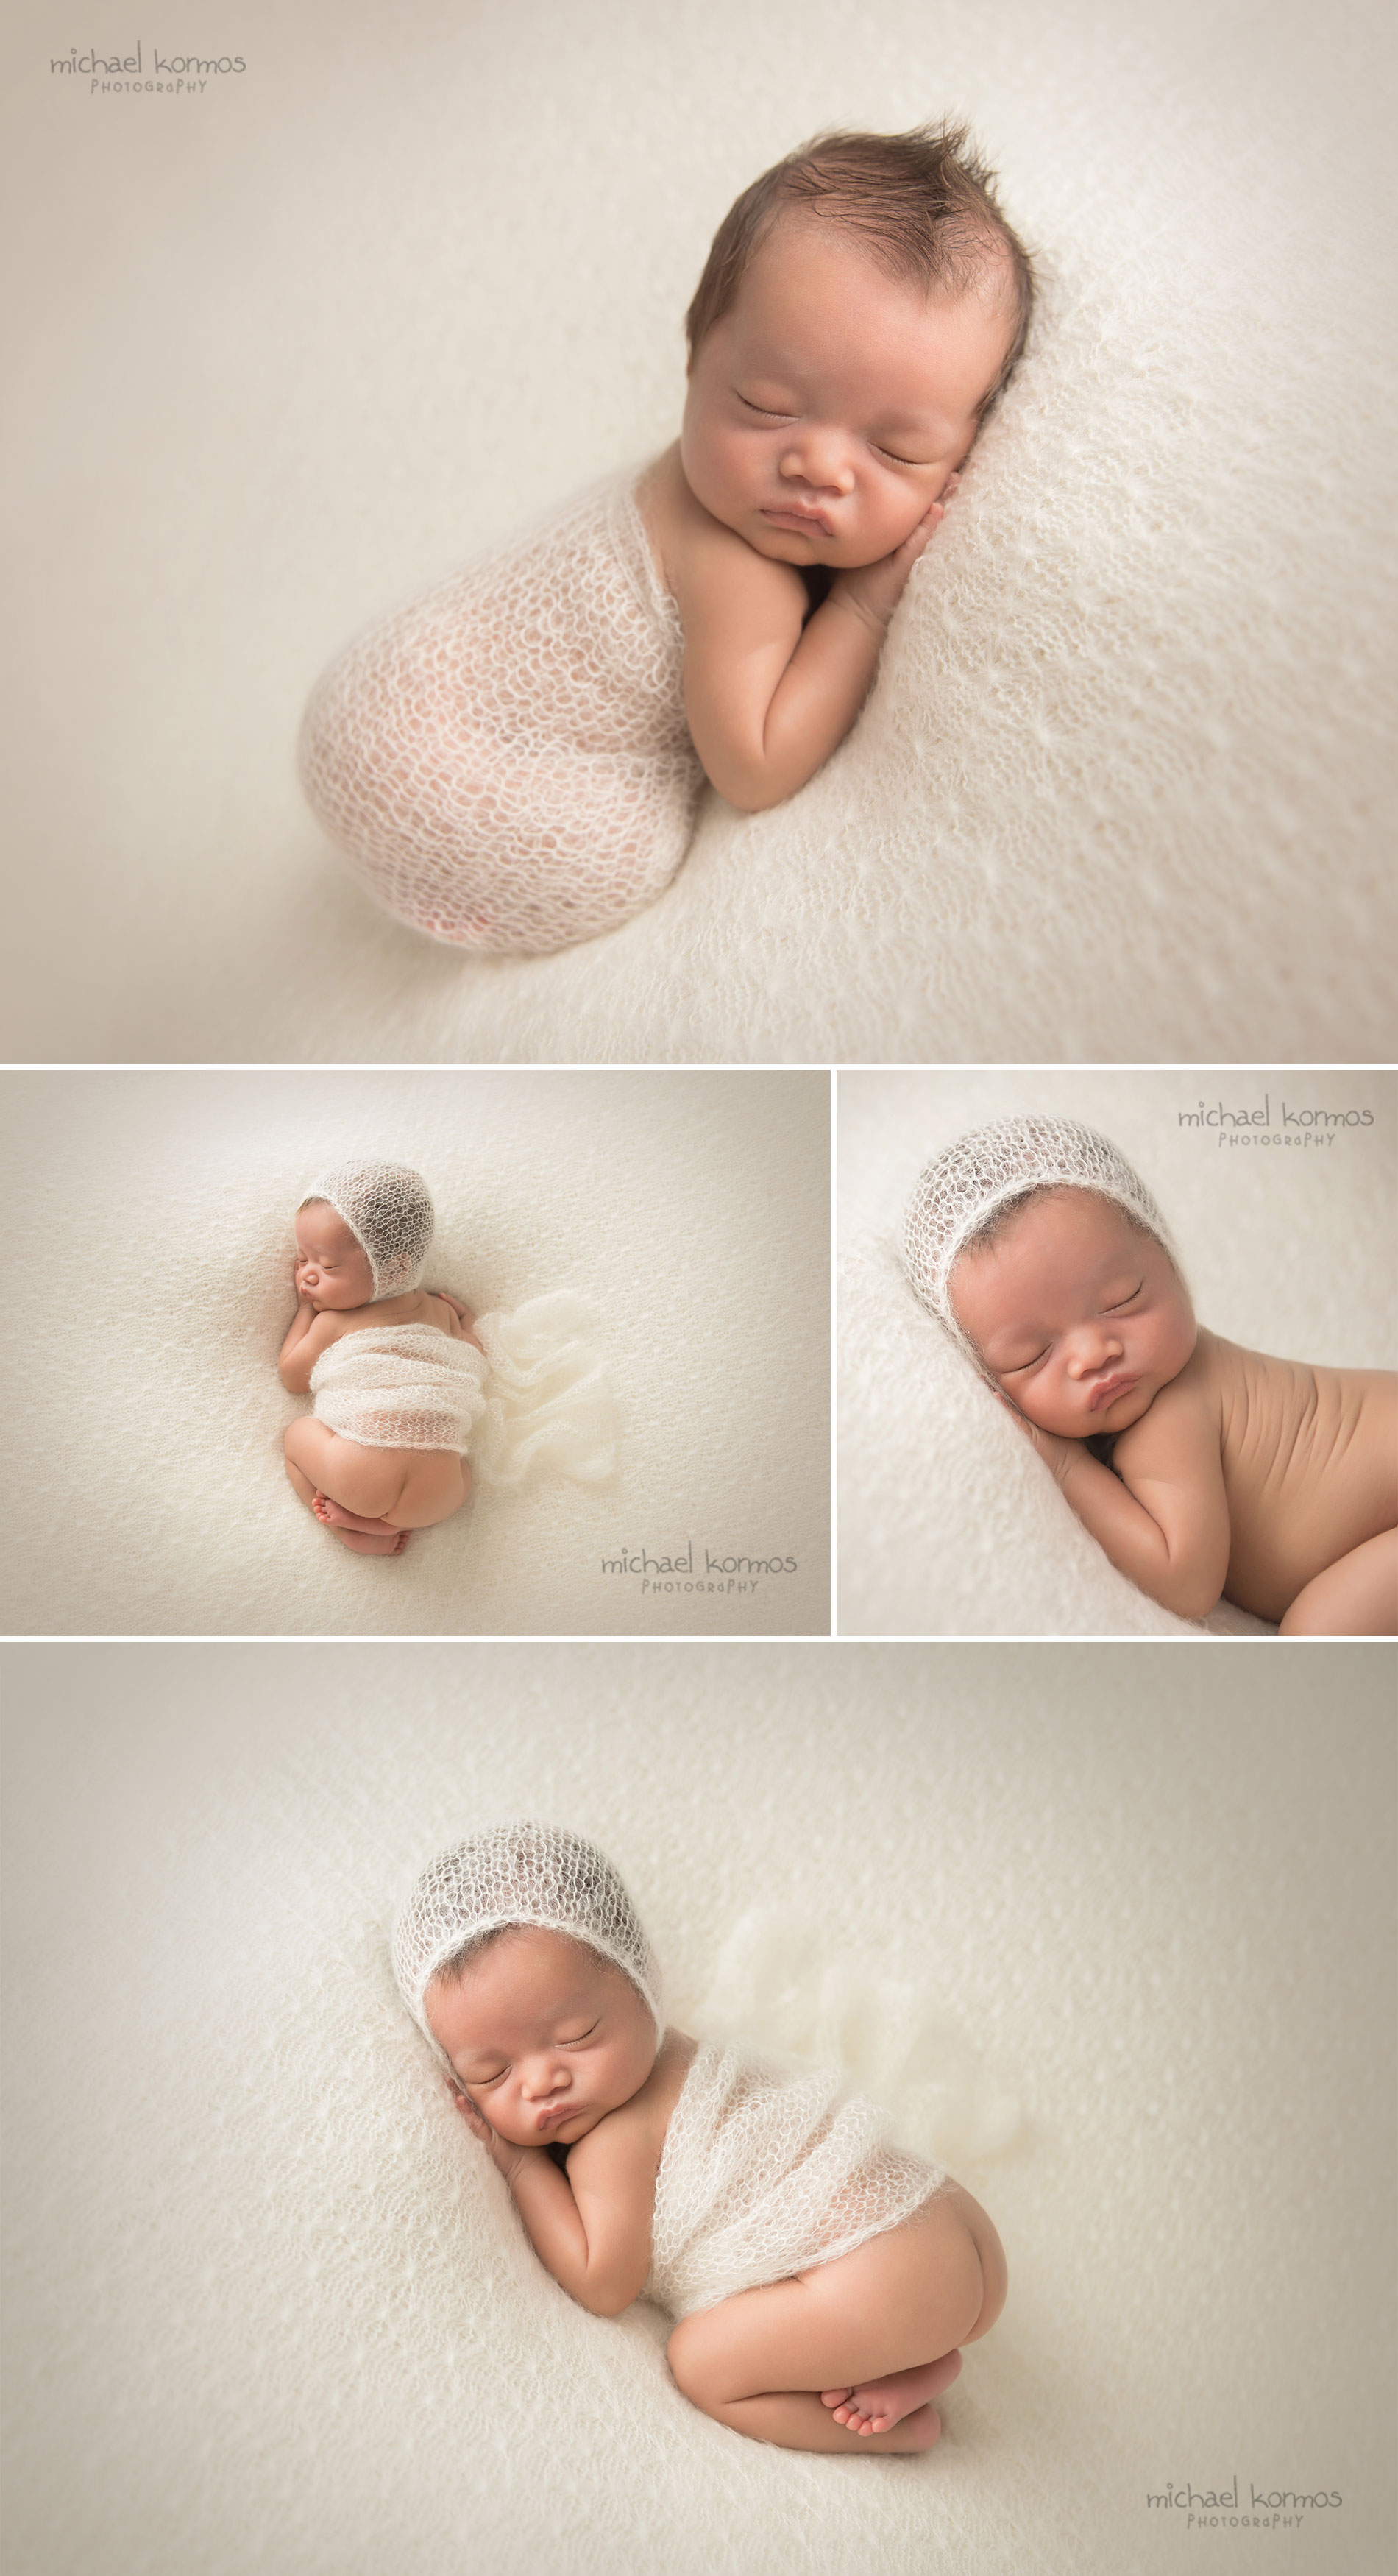 nyc newborn photography studio